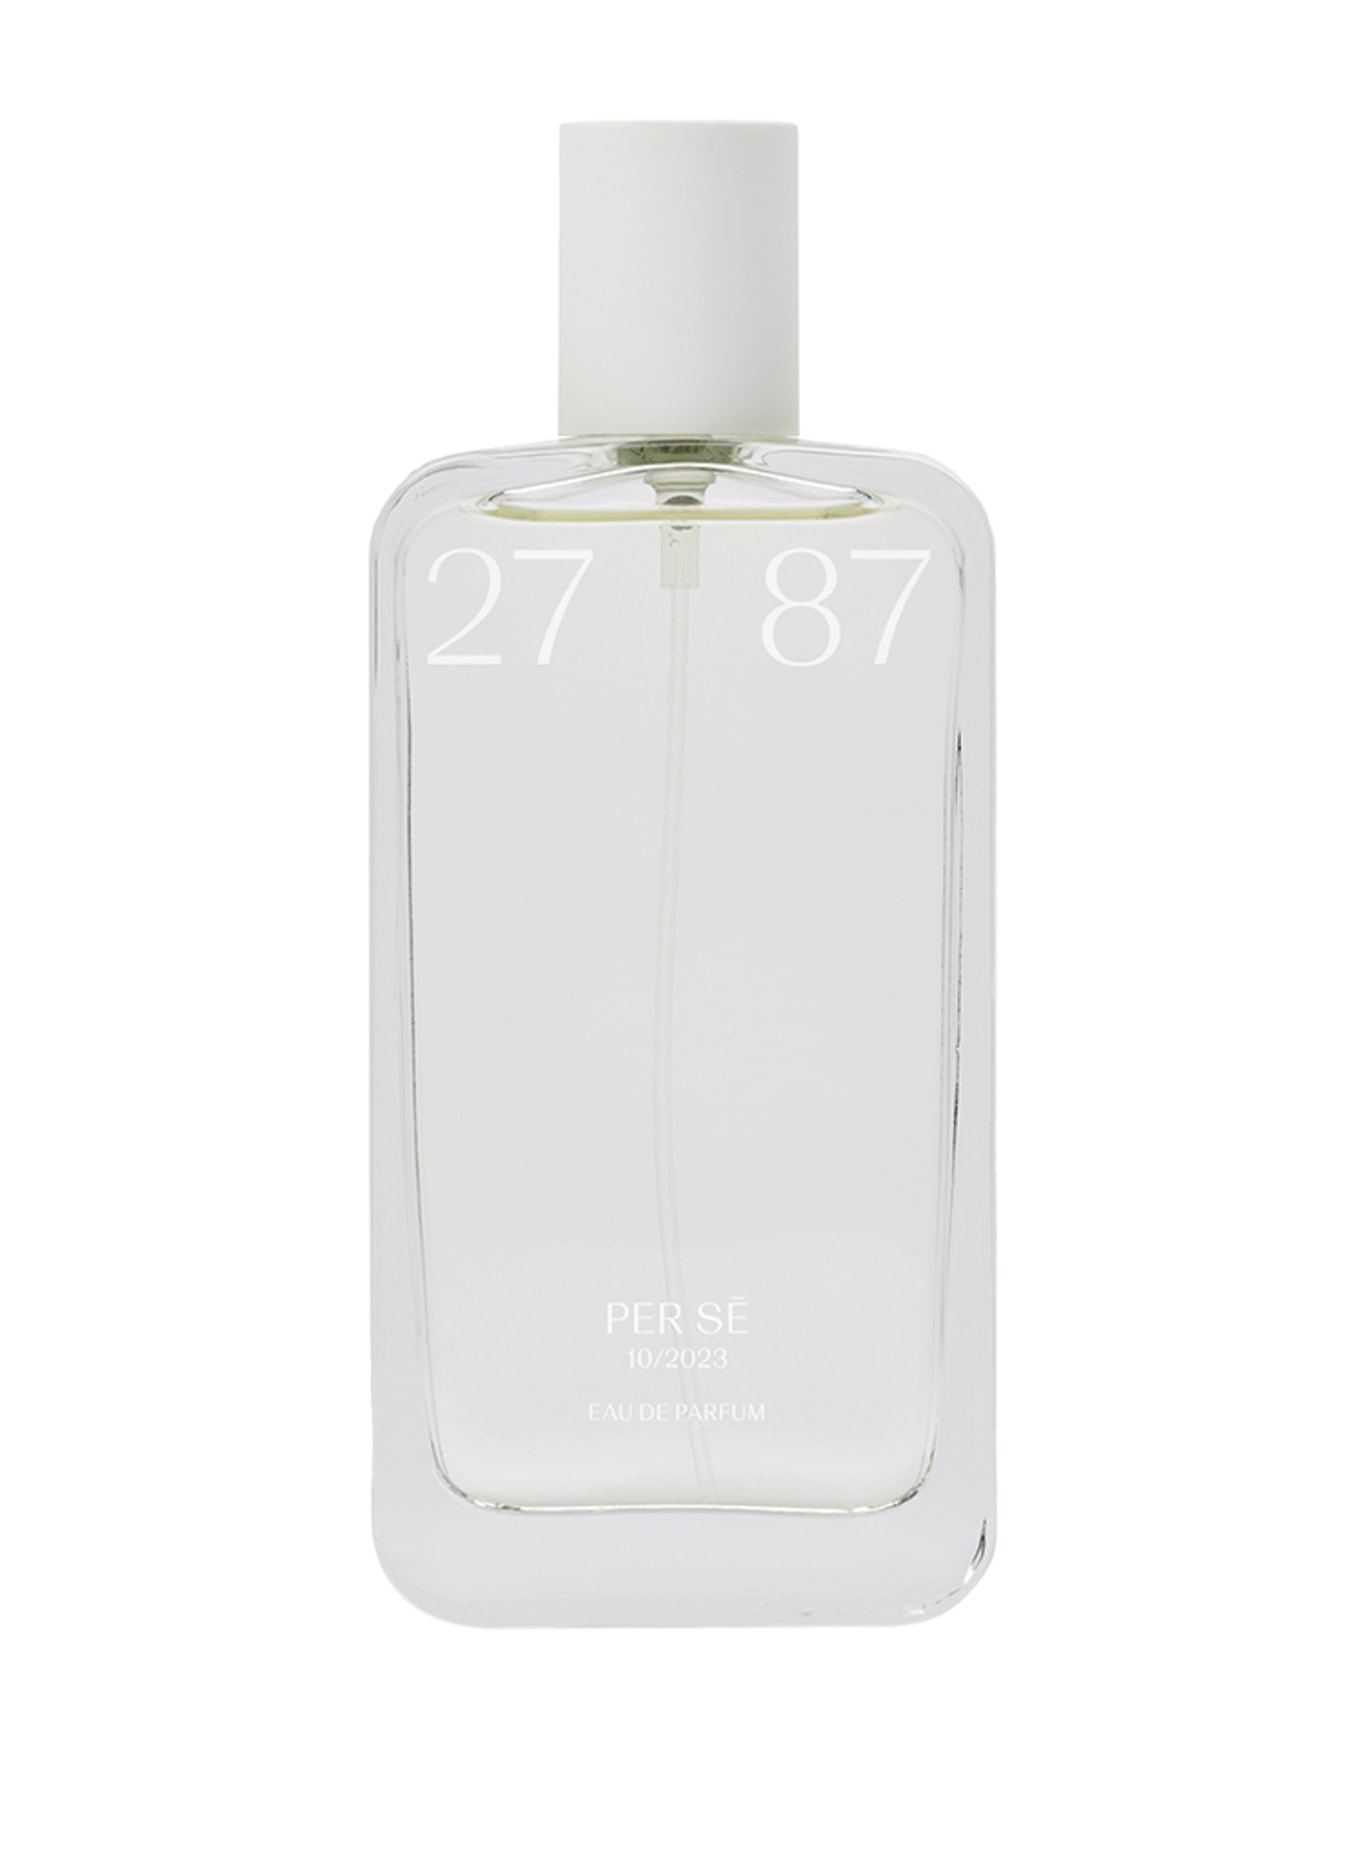 27 87 Perfumes PER SE (Obrazek 1)